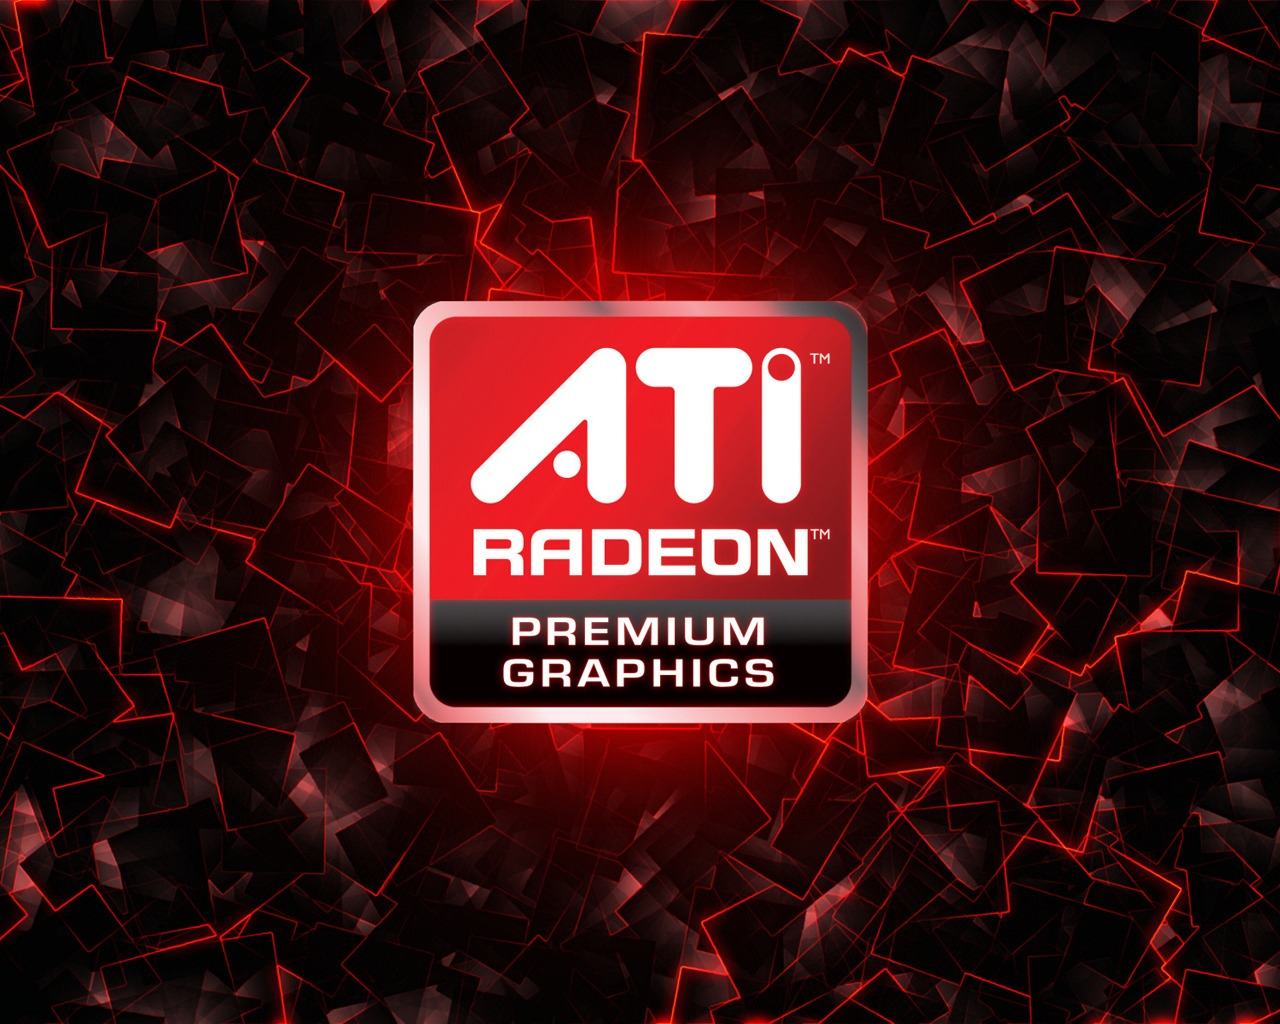 ATI Radeon Premium Graphics for 1280 x 1024 resolution